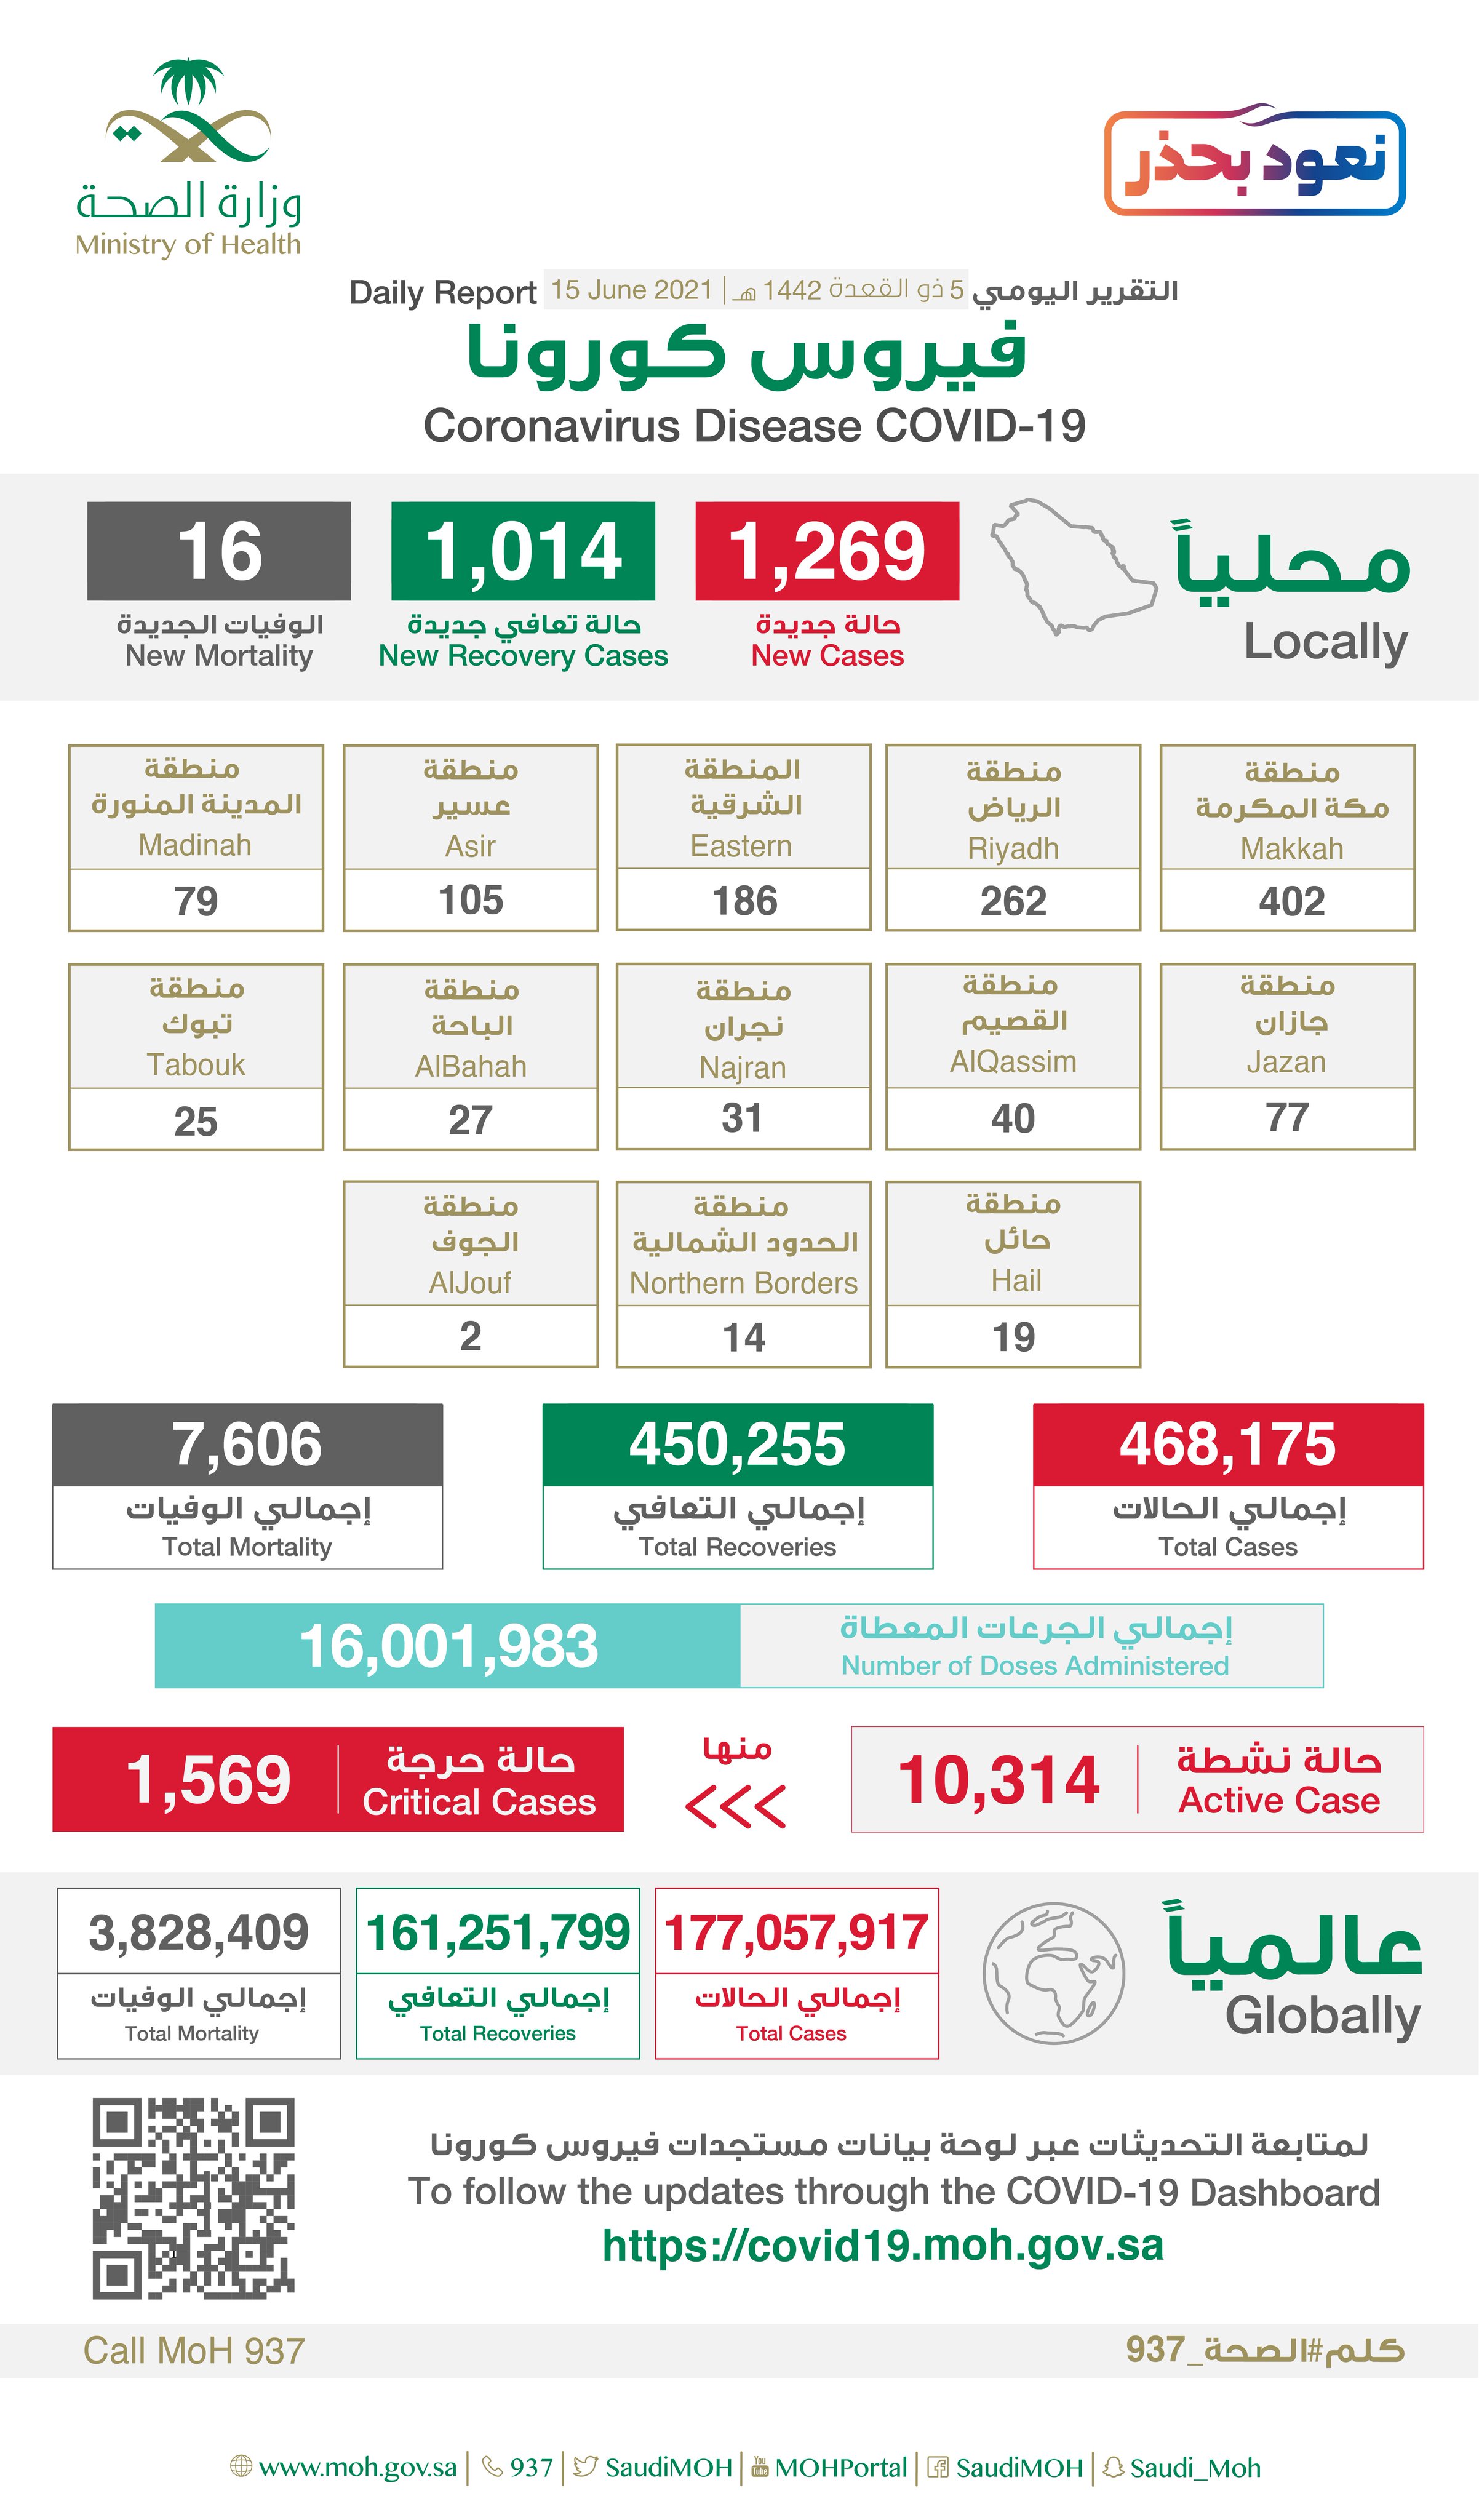 Saudi Arabia Coronavirus : Total Cases :468,175 , New Cases : 1,269 , Cured : 450,255 , Deaths: 7,606, Active Cases : 10,314